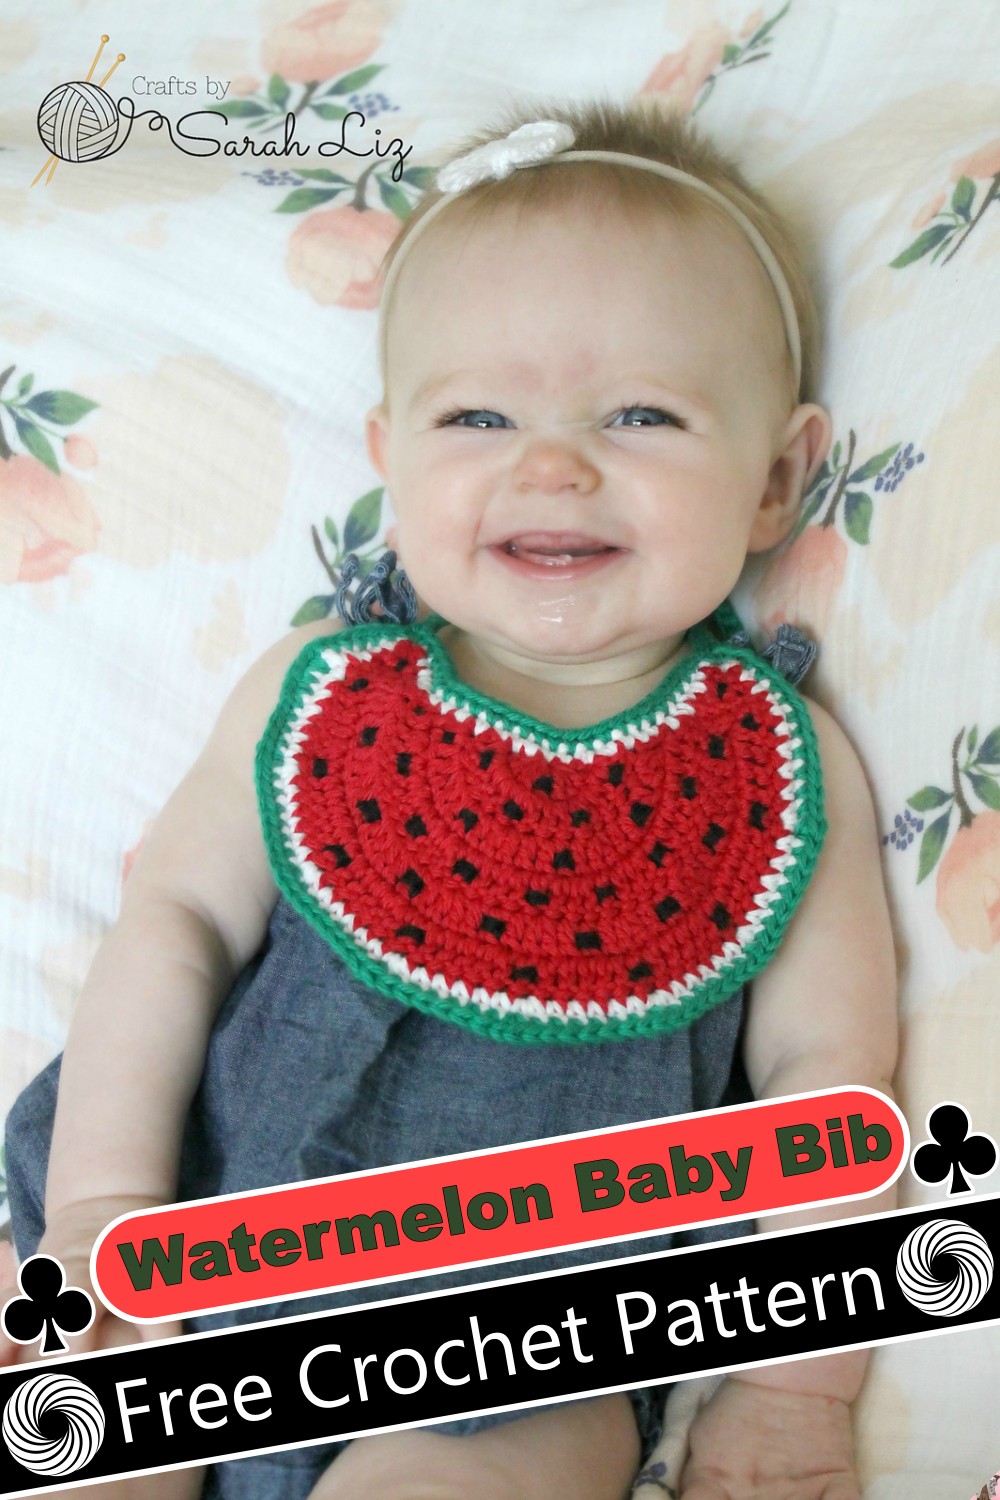 Watermelon Baby Bib